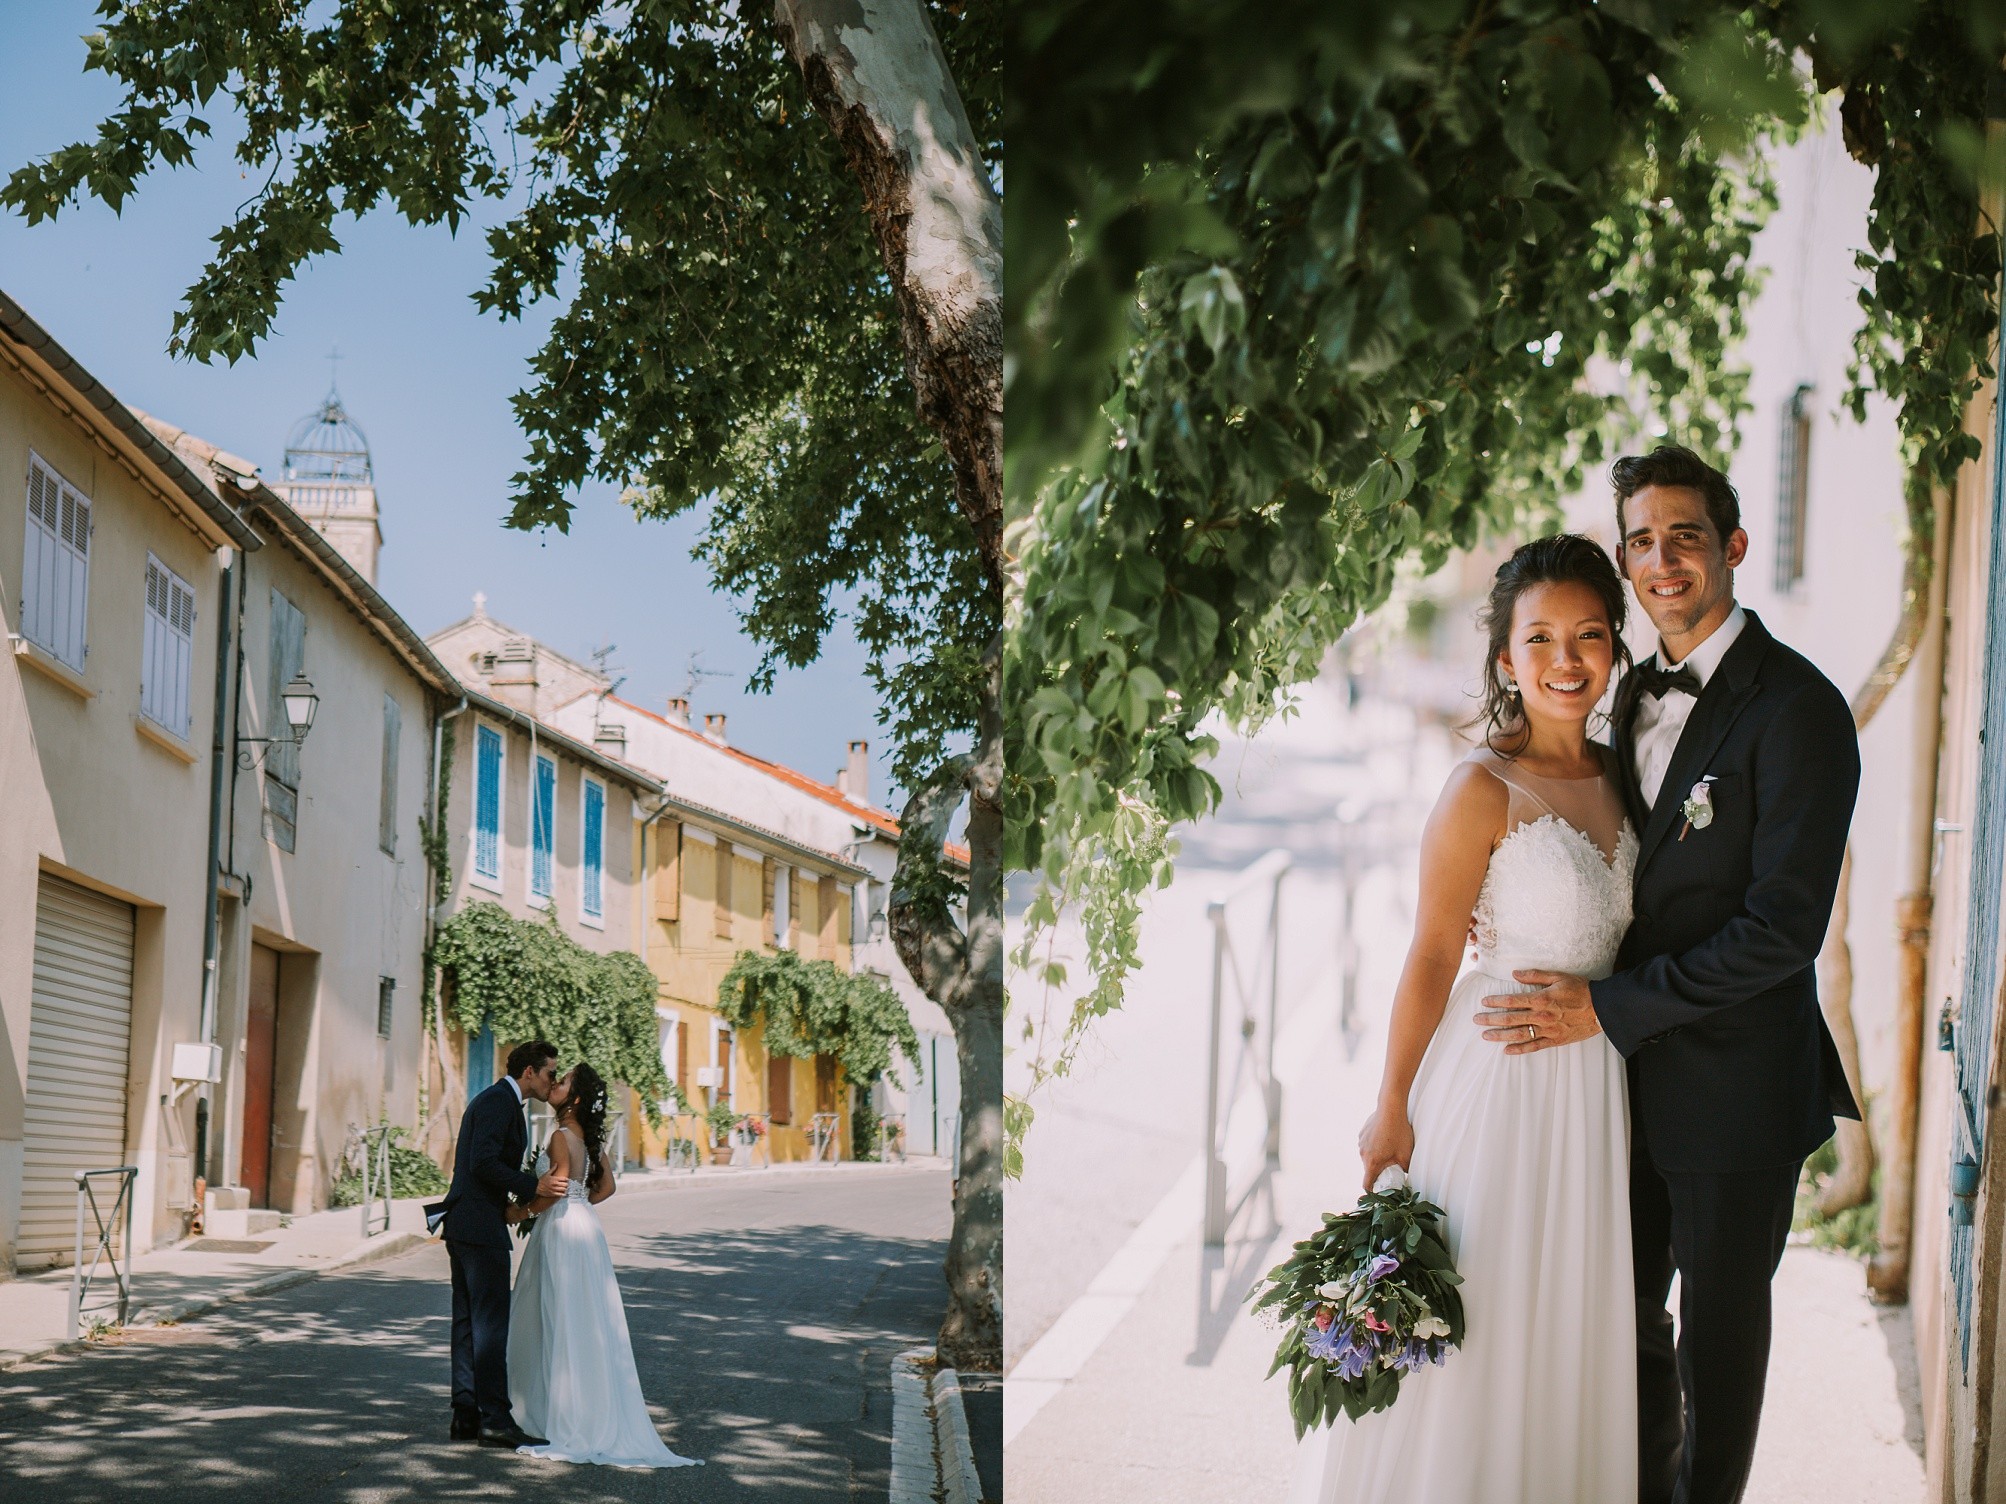 katerynaphotos-mariage-photographe-puyloubier-provence-aix-en-provence-sud-de-la-france_0379.jpg